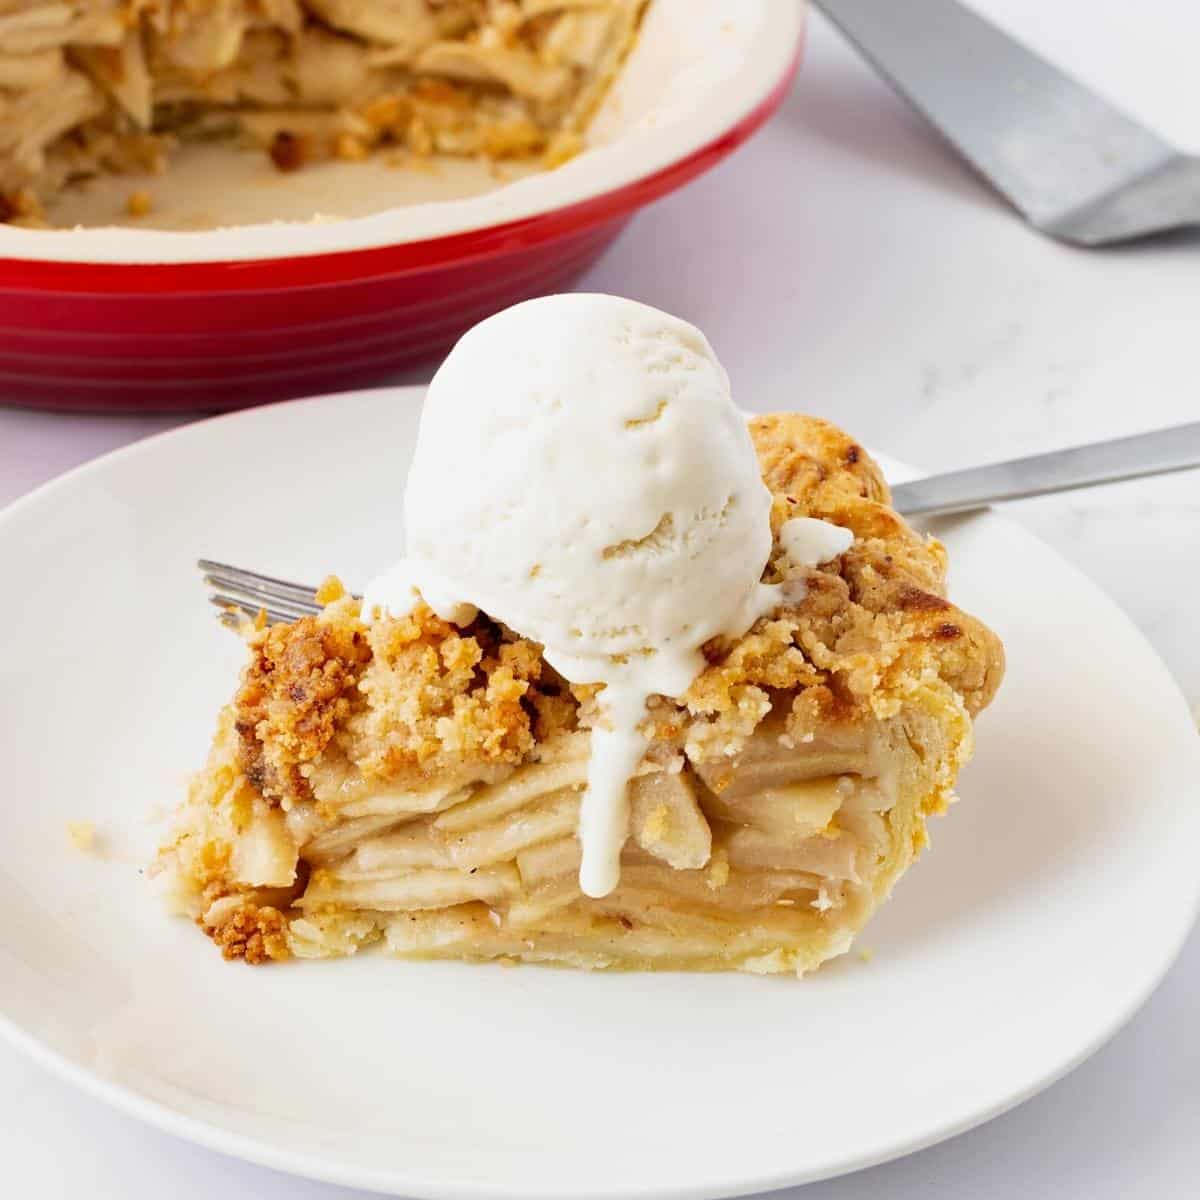 A slice of dutch apple pie with ice cream.